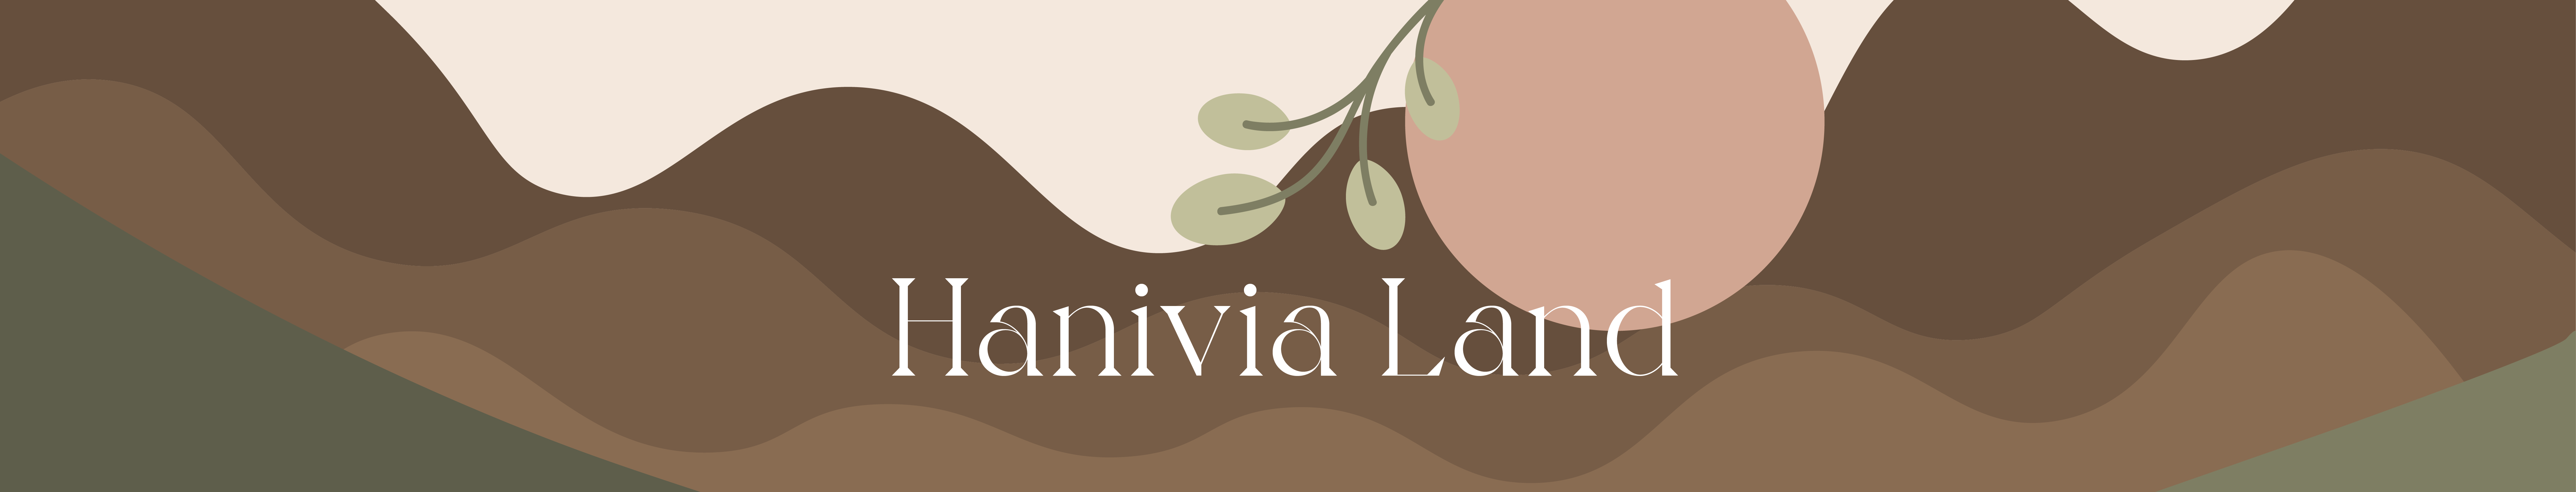 Hanivia Land's profile banner